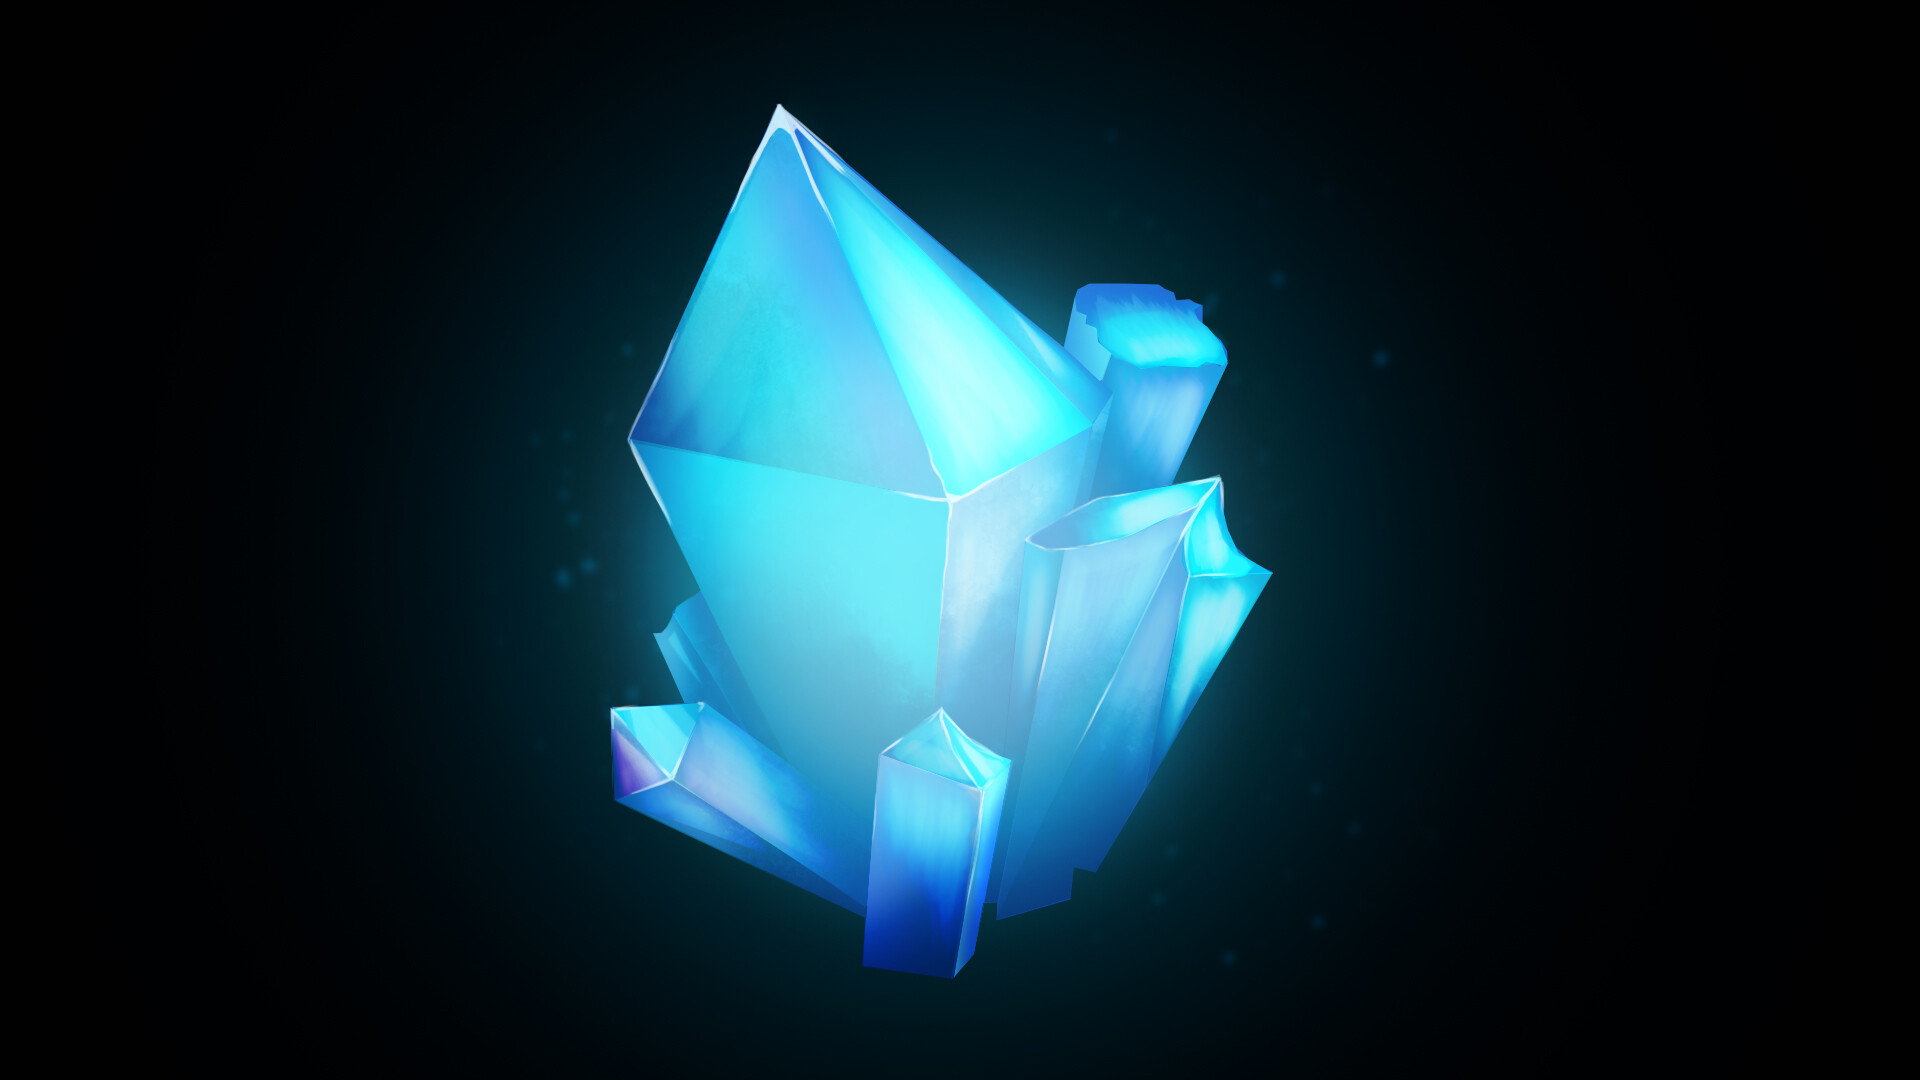 ArtStation - Game Elements: snow crystal